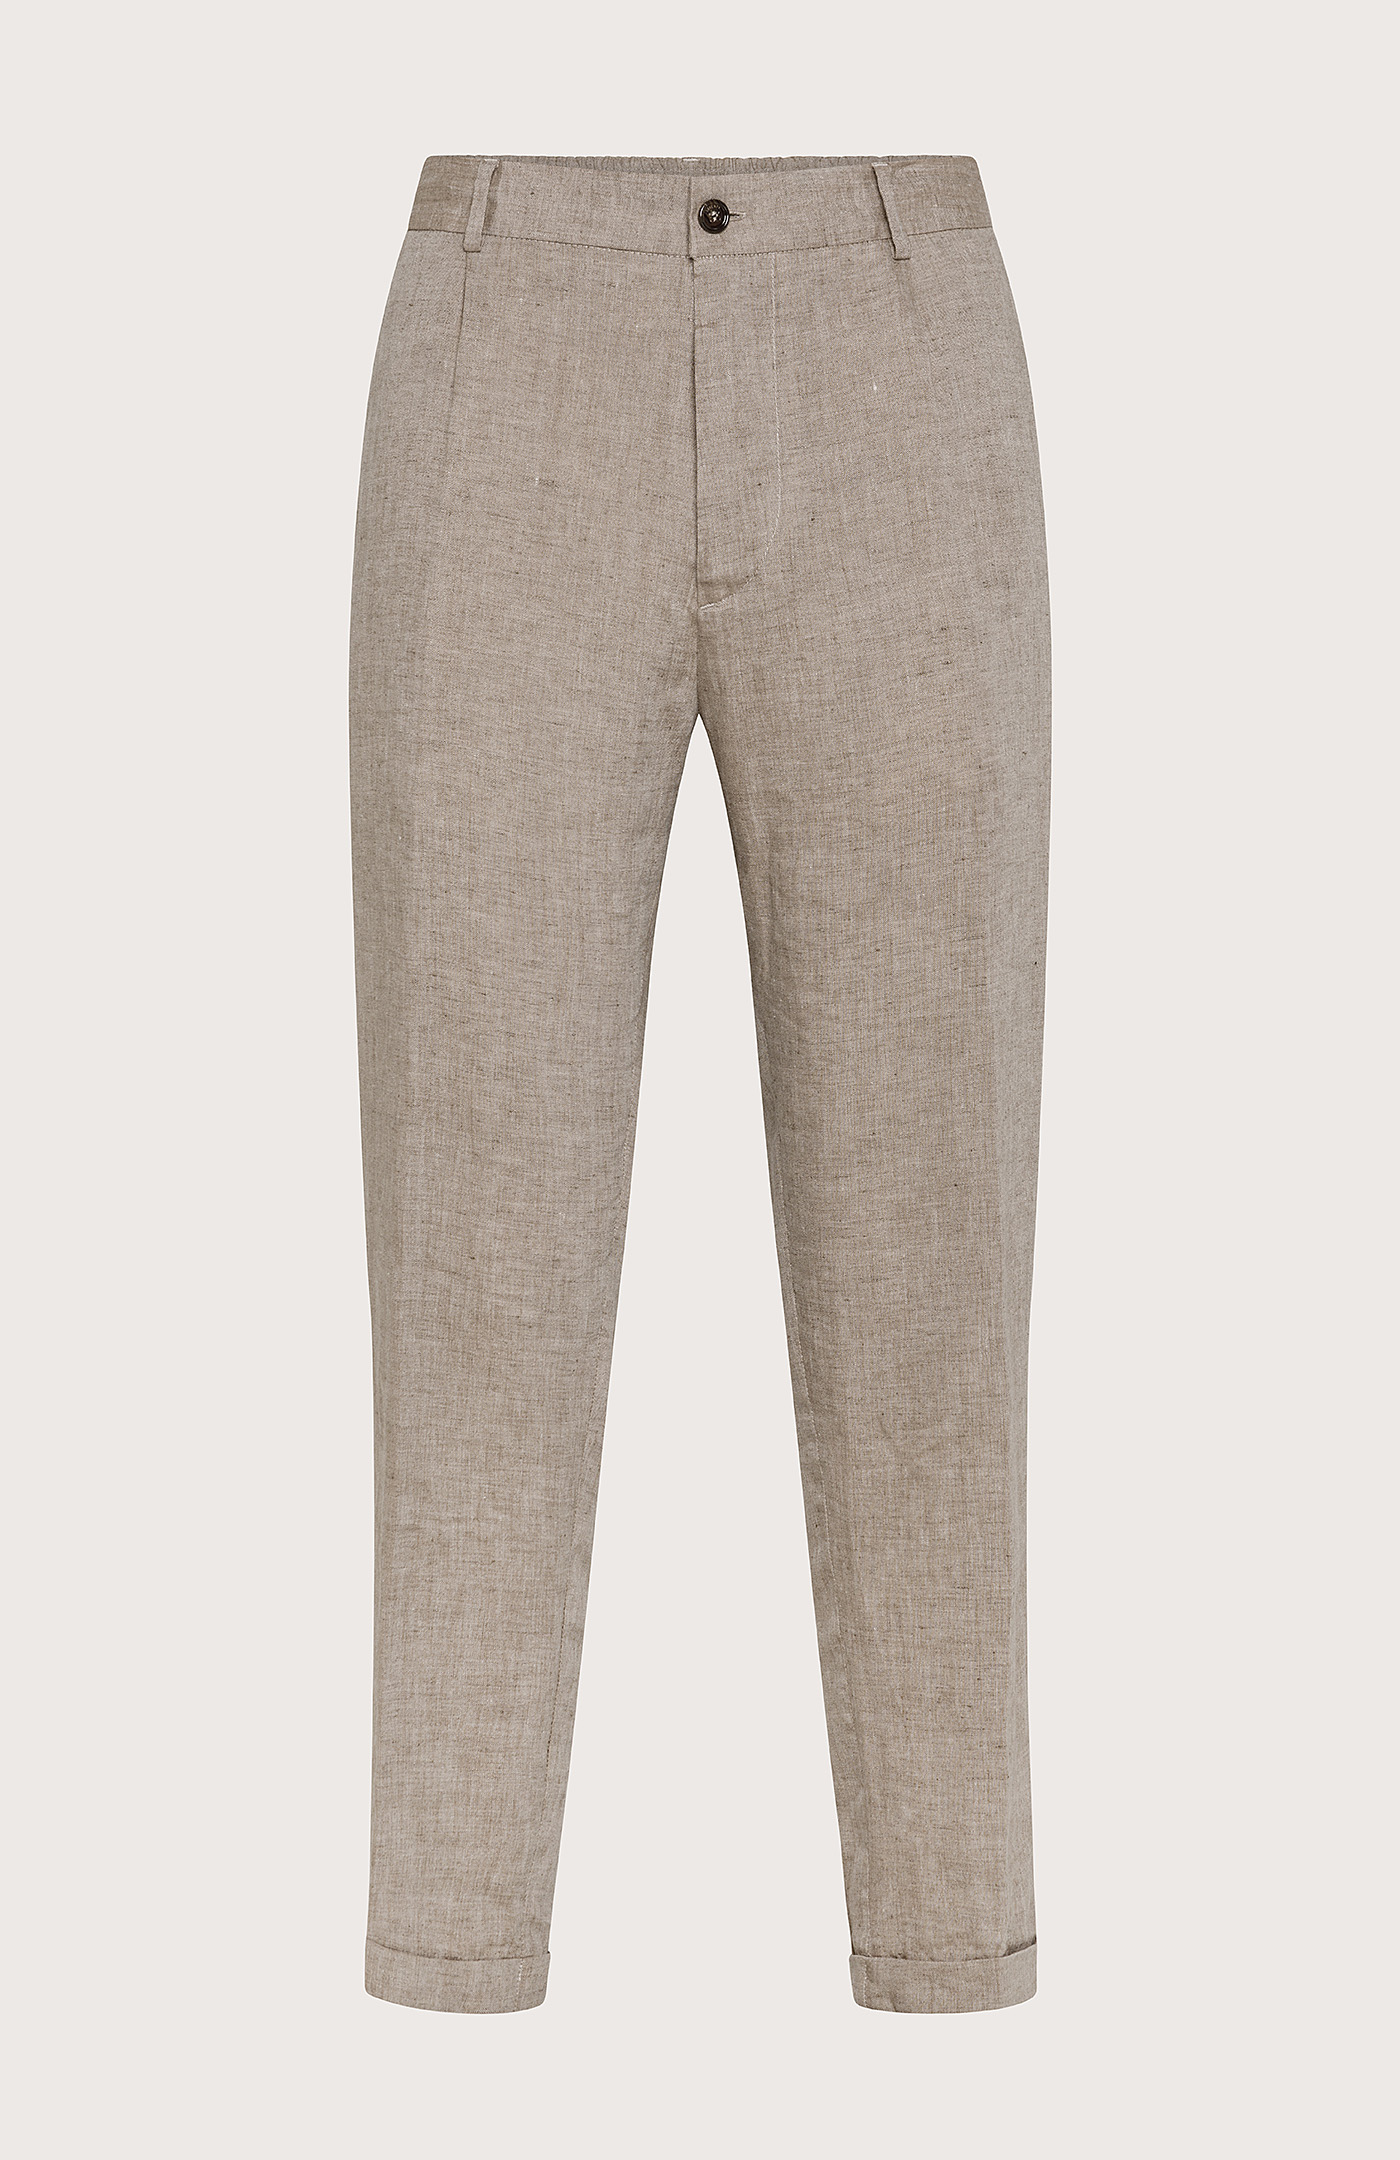 Zara | Pants & Jumpsuits | Zara Carrot Fit Trousers With Darts Detail In  Camel Beige | Poshmark